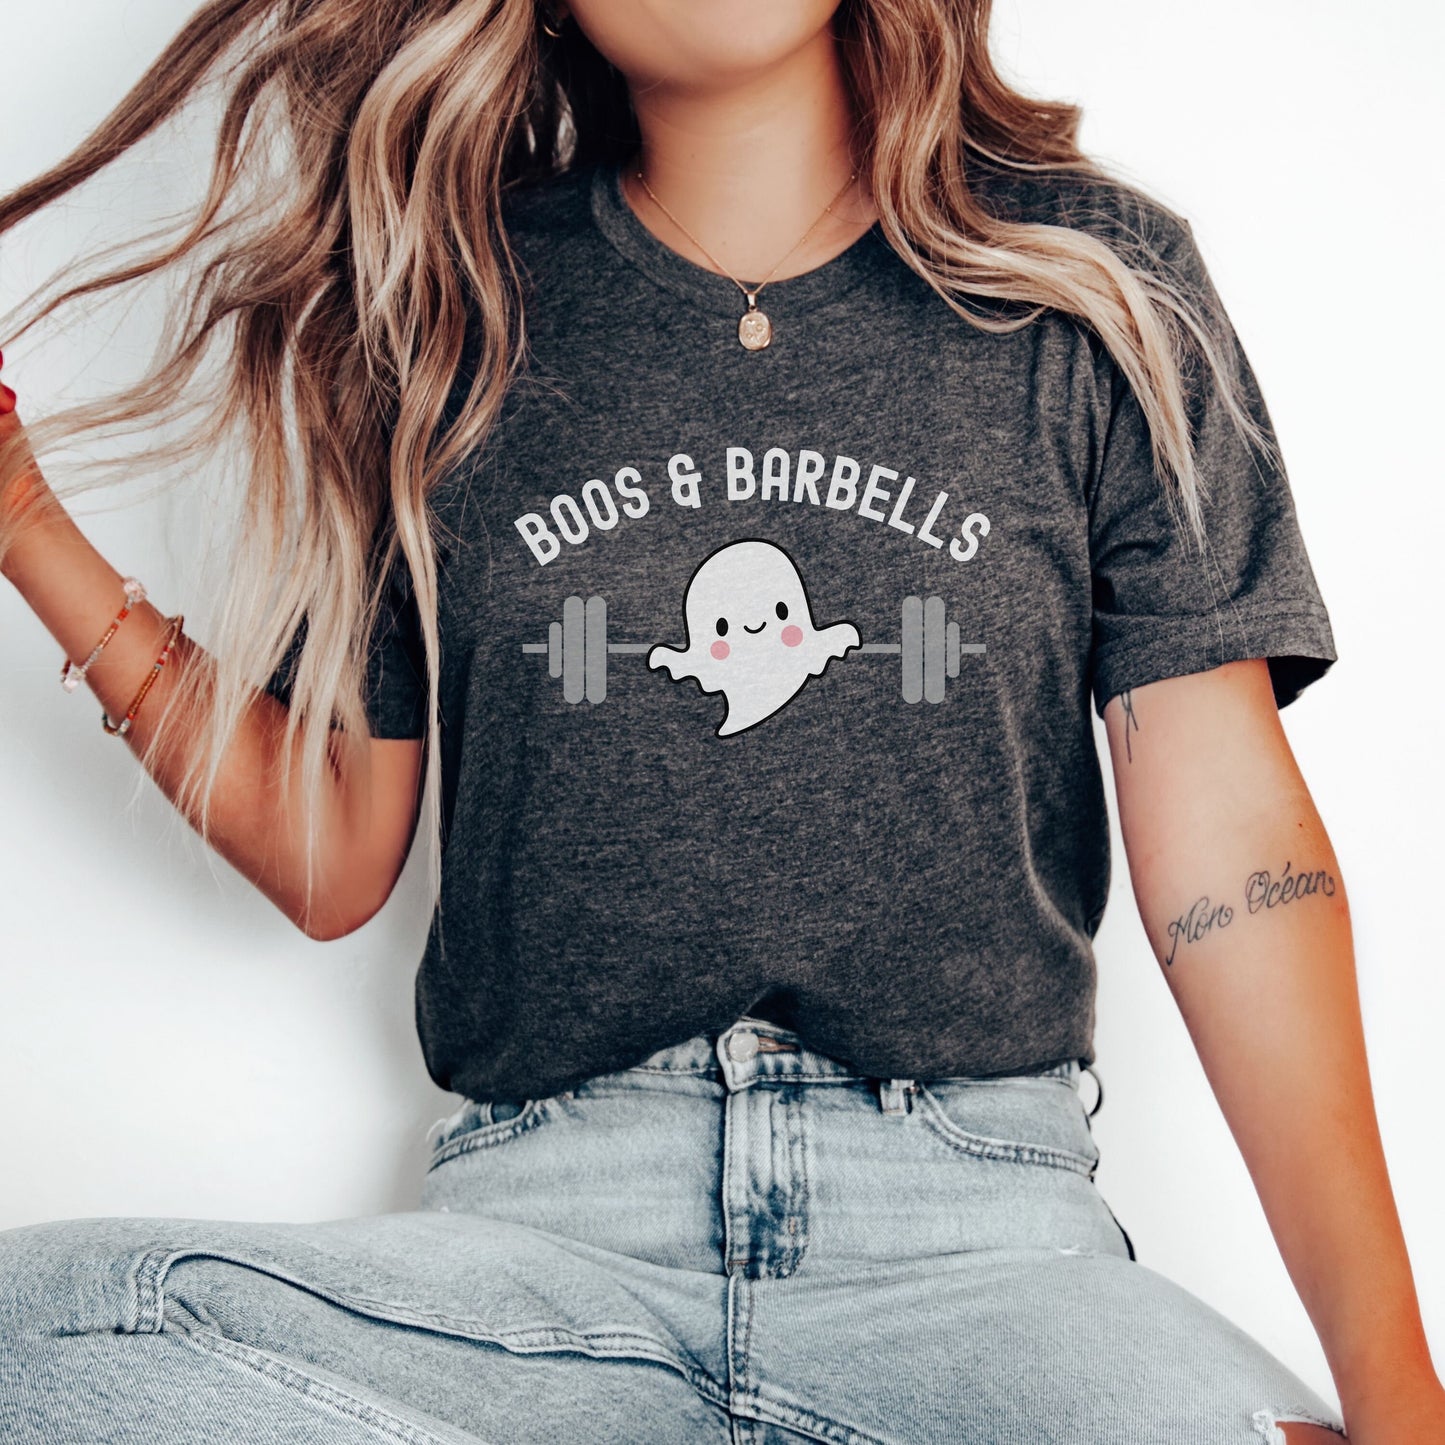 Boos and Barbells Halloween Workout Shirt